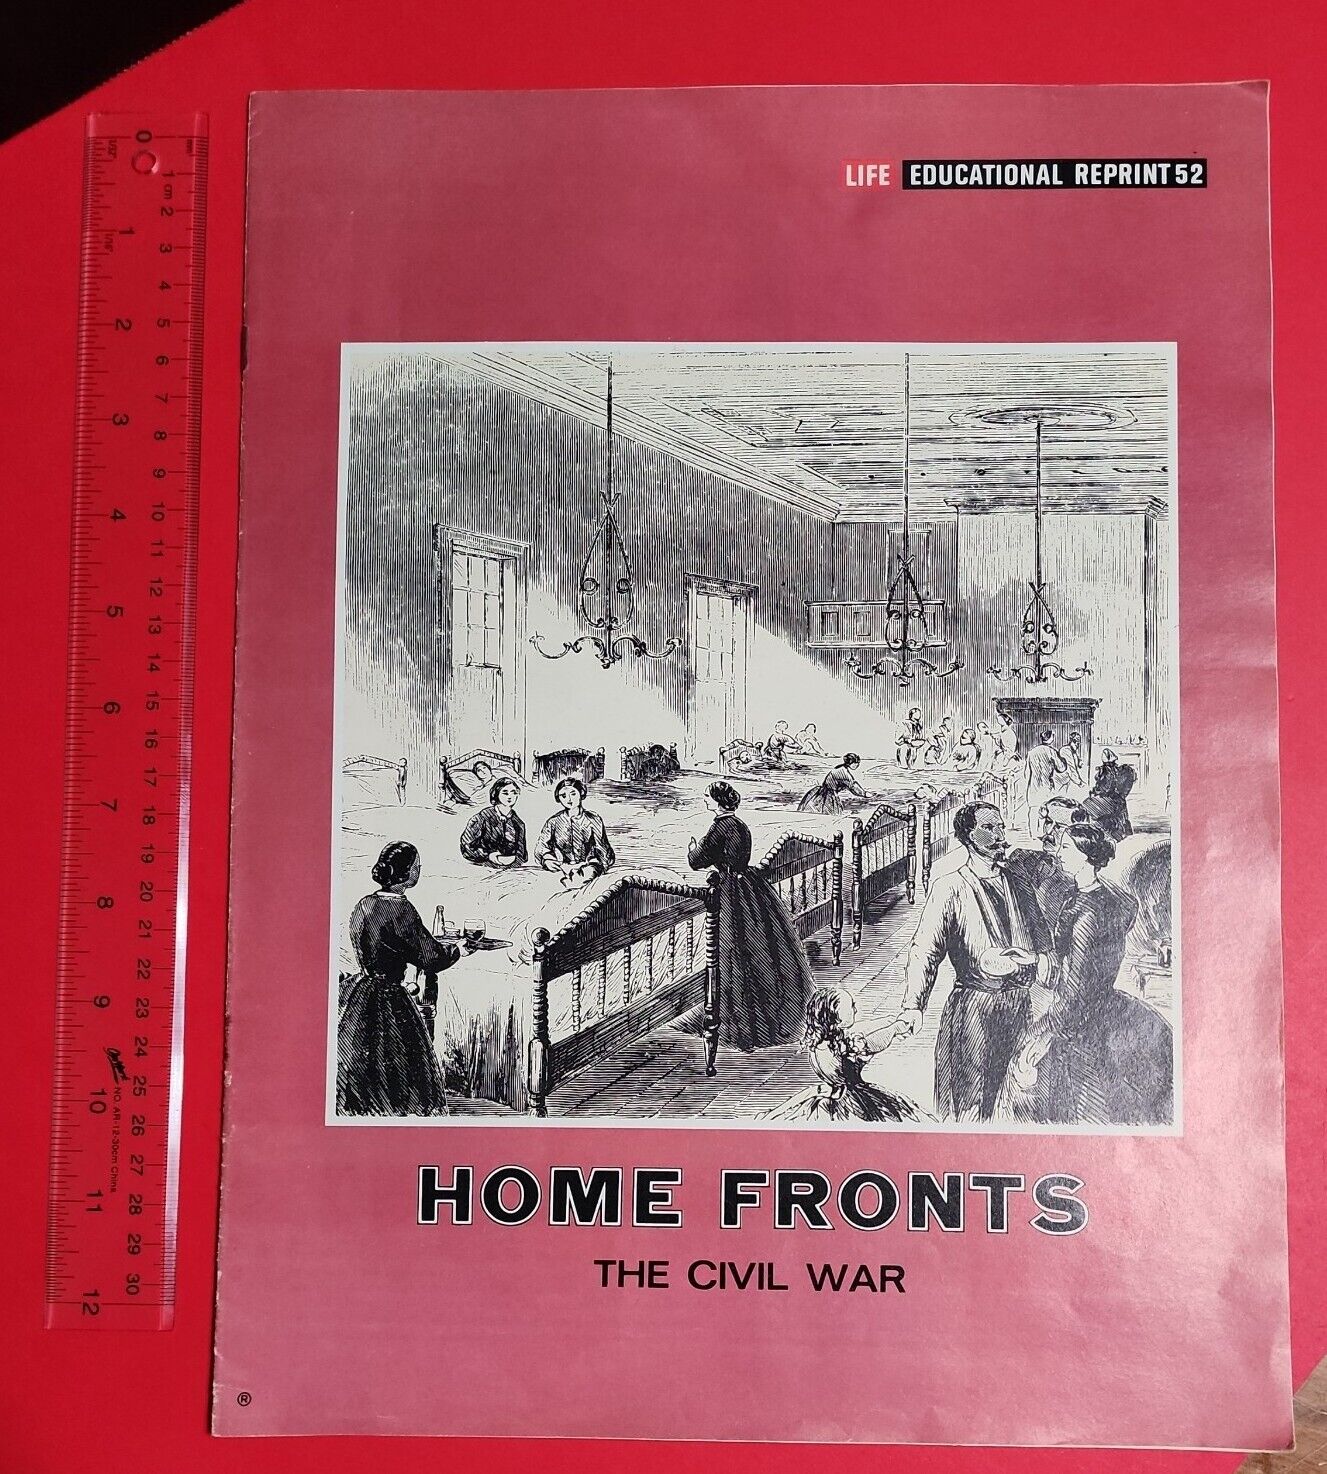 RARE VTG Life Educational Reprints #52 - Home Fronts: The Civil War series